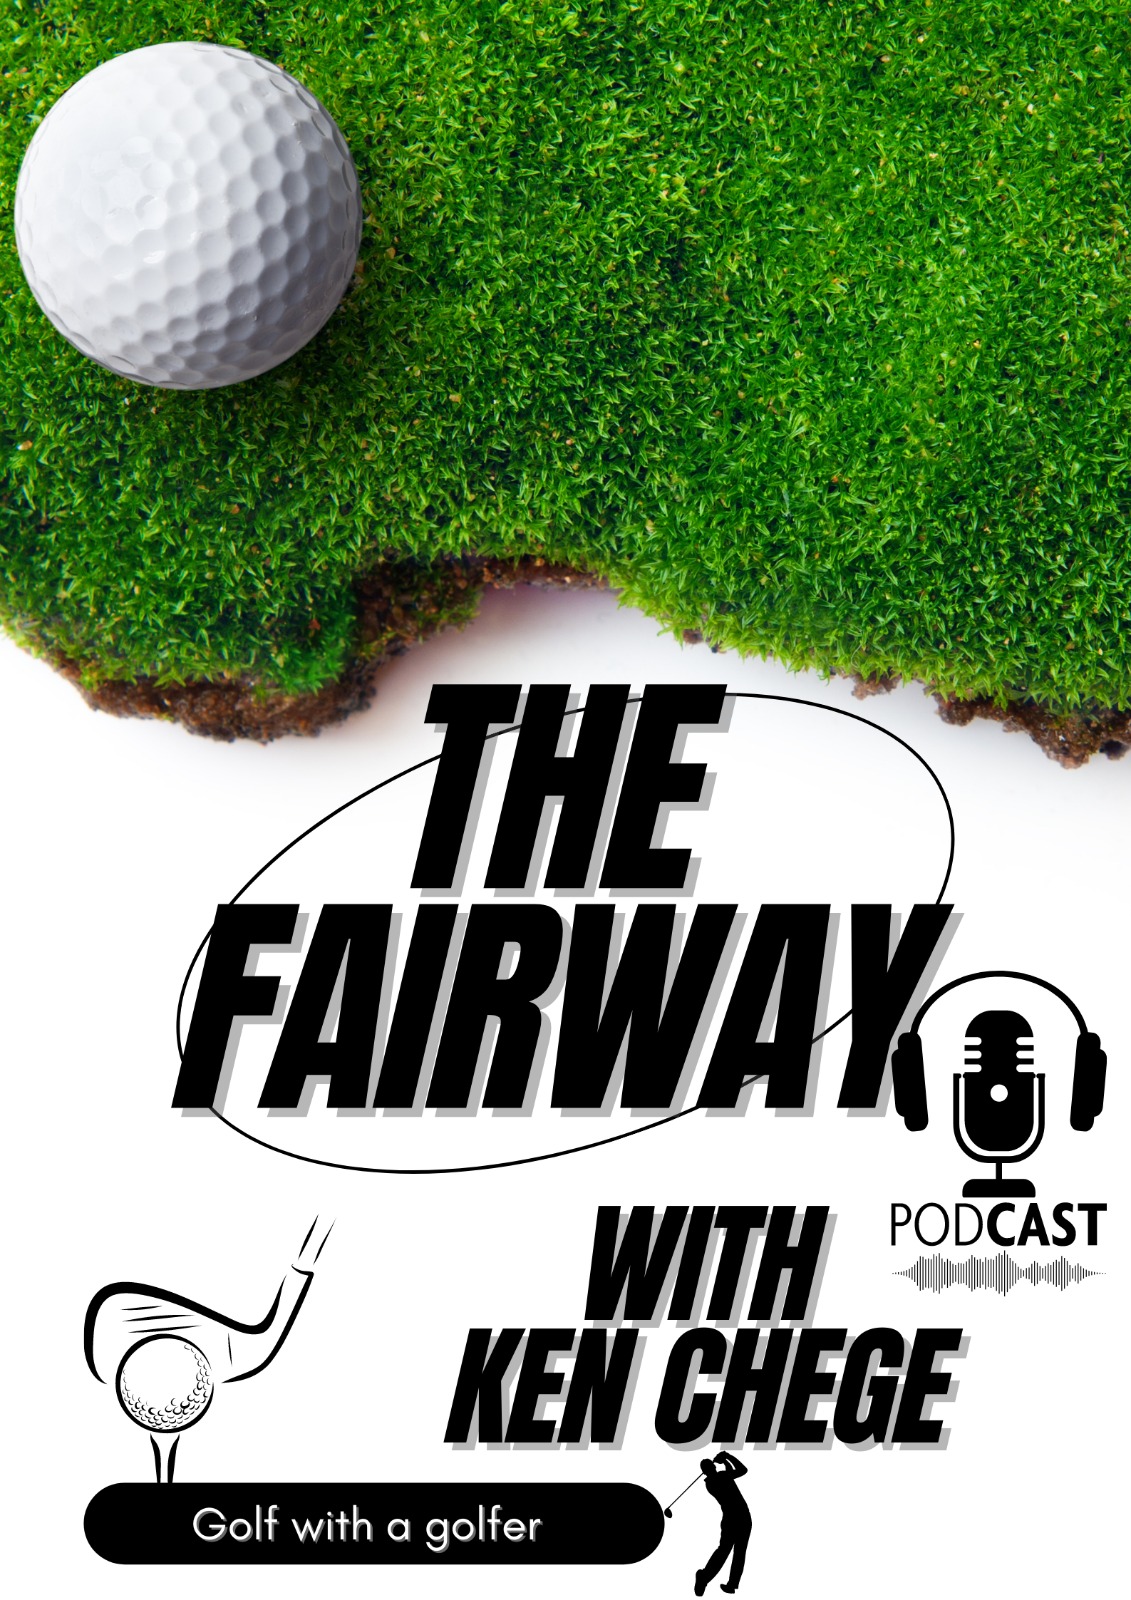 The fairway podcast: Episode 4